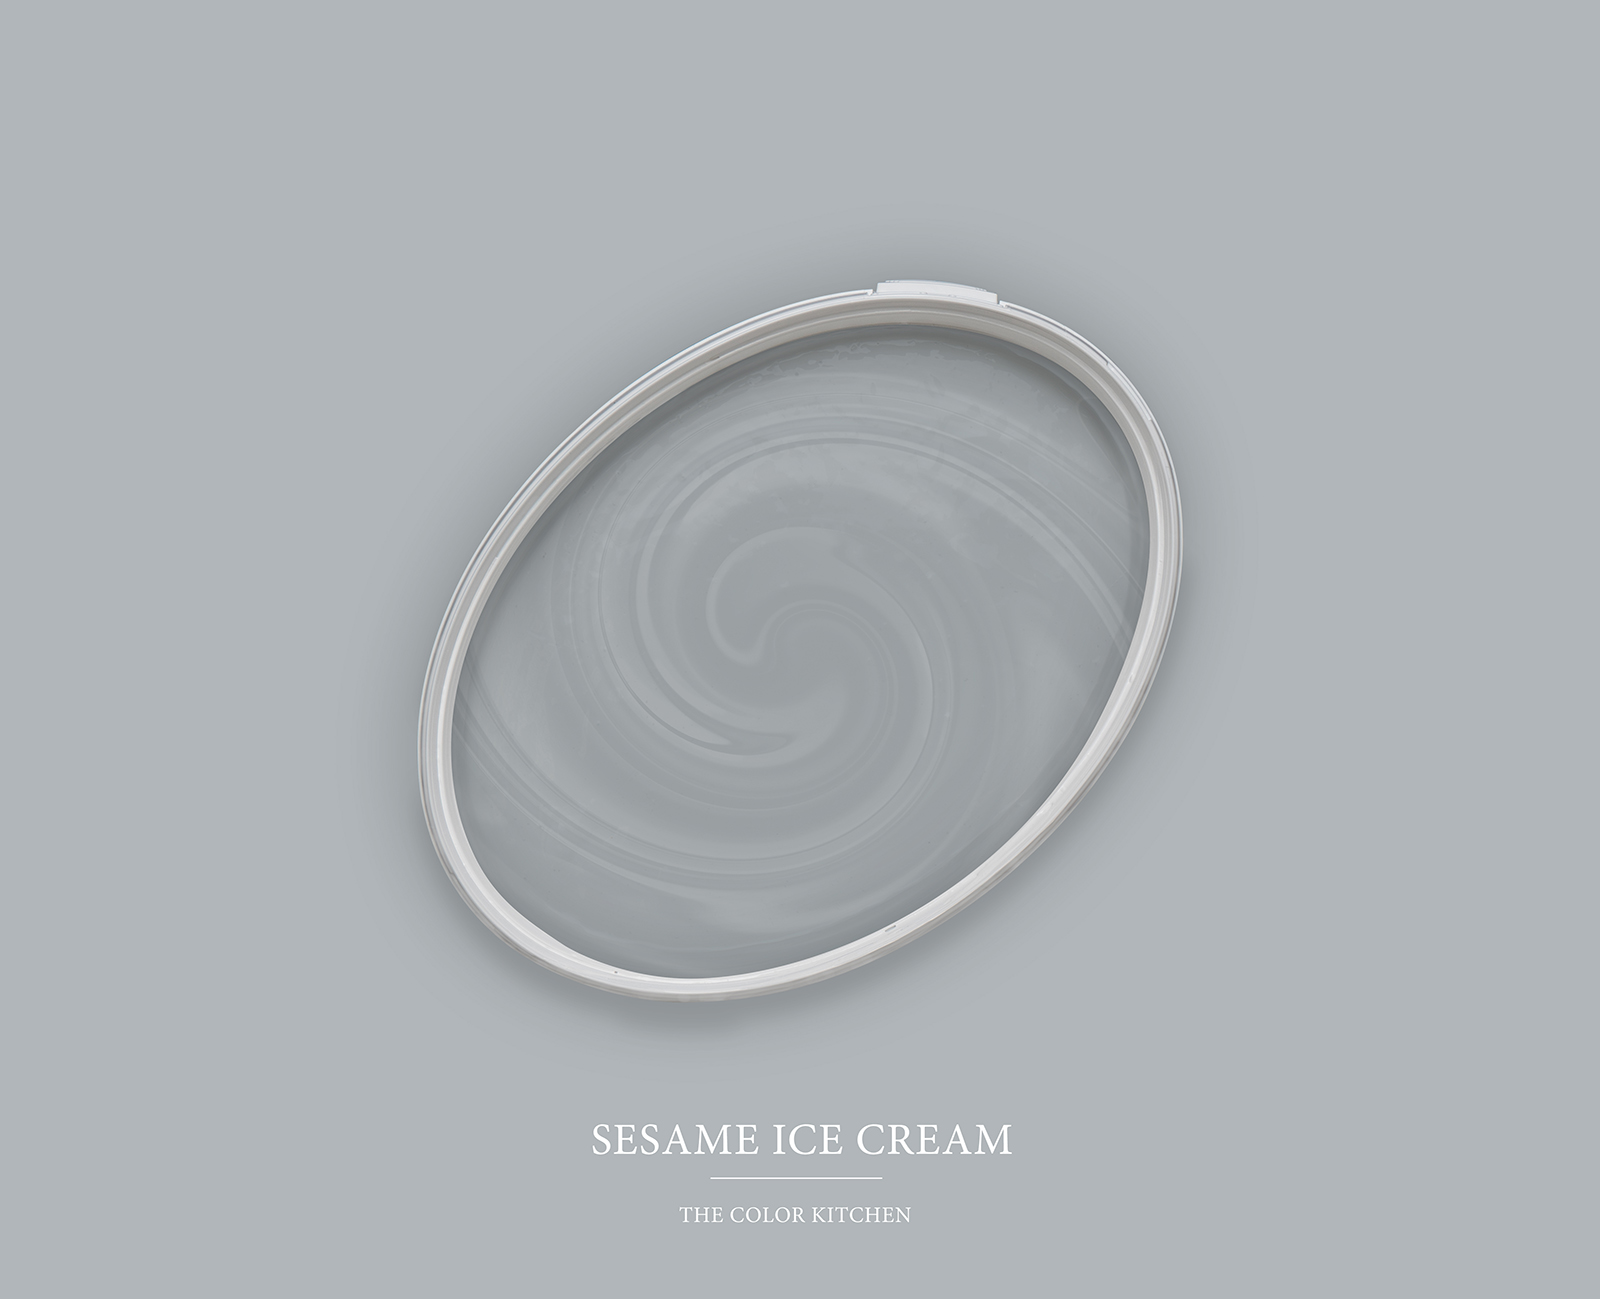 Wandfarbe in bläulichem Hellgrau »Sesame Ice Cream« TCK1005 – 5 Liter
